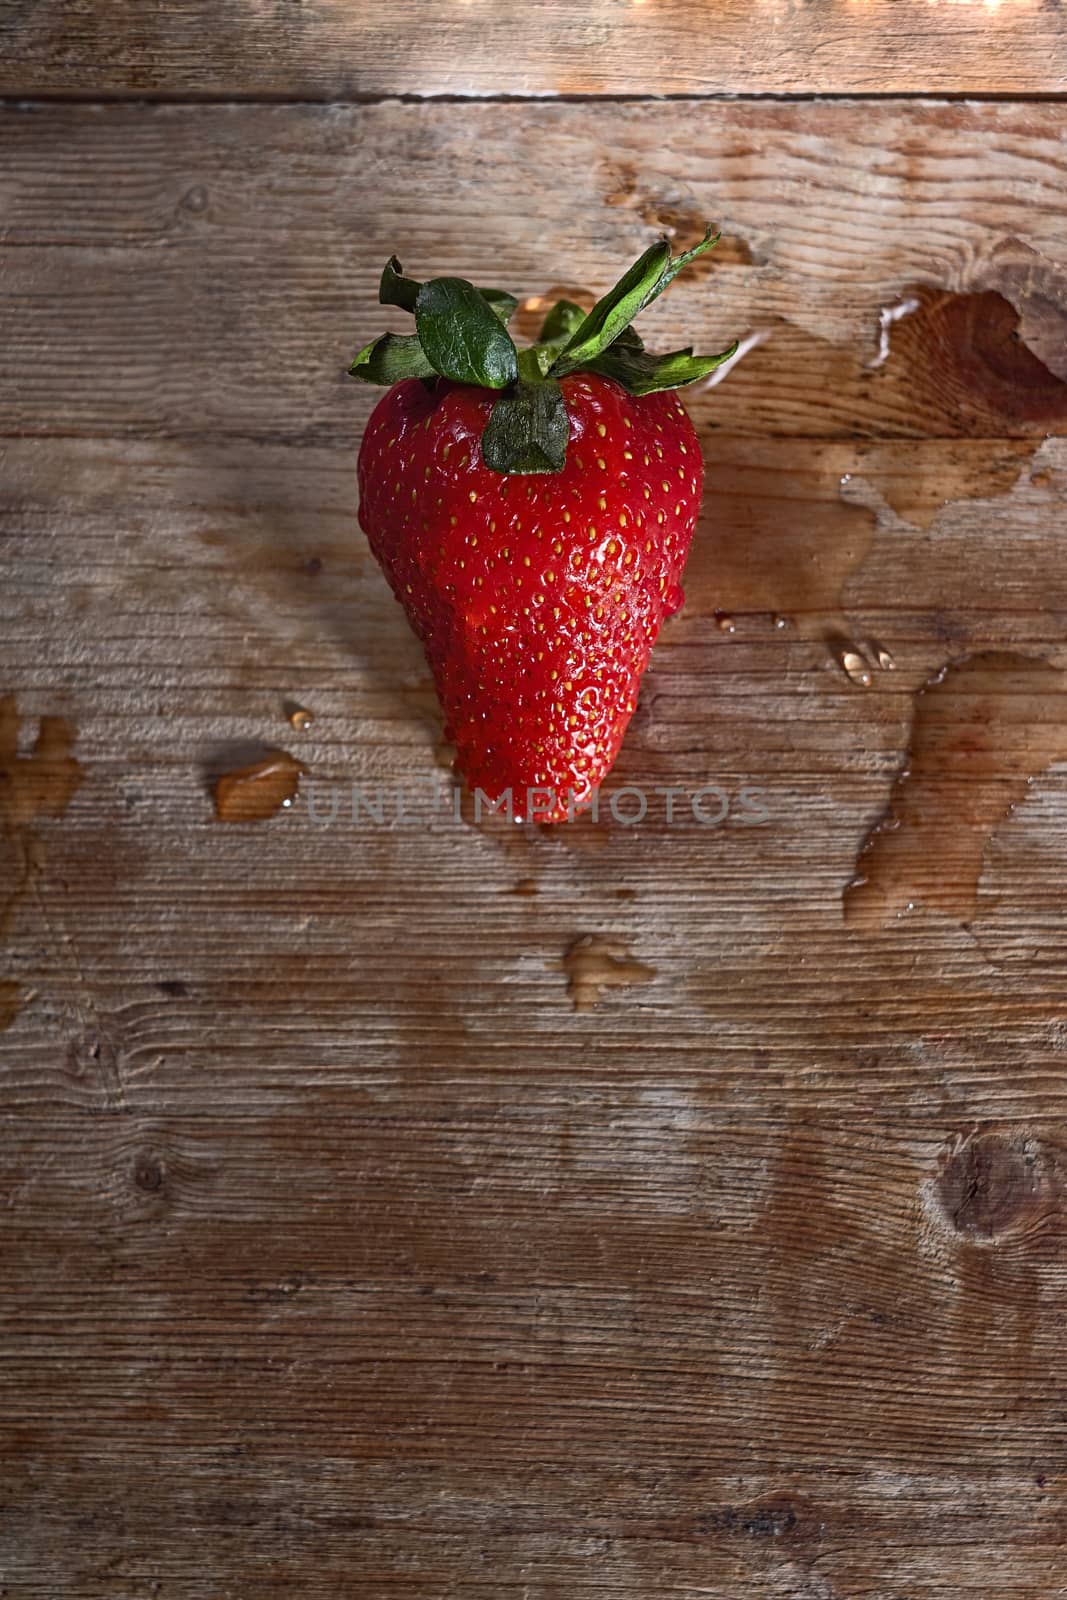 Rustic strawberry  by EnzoArt